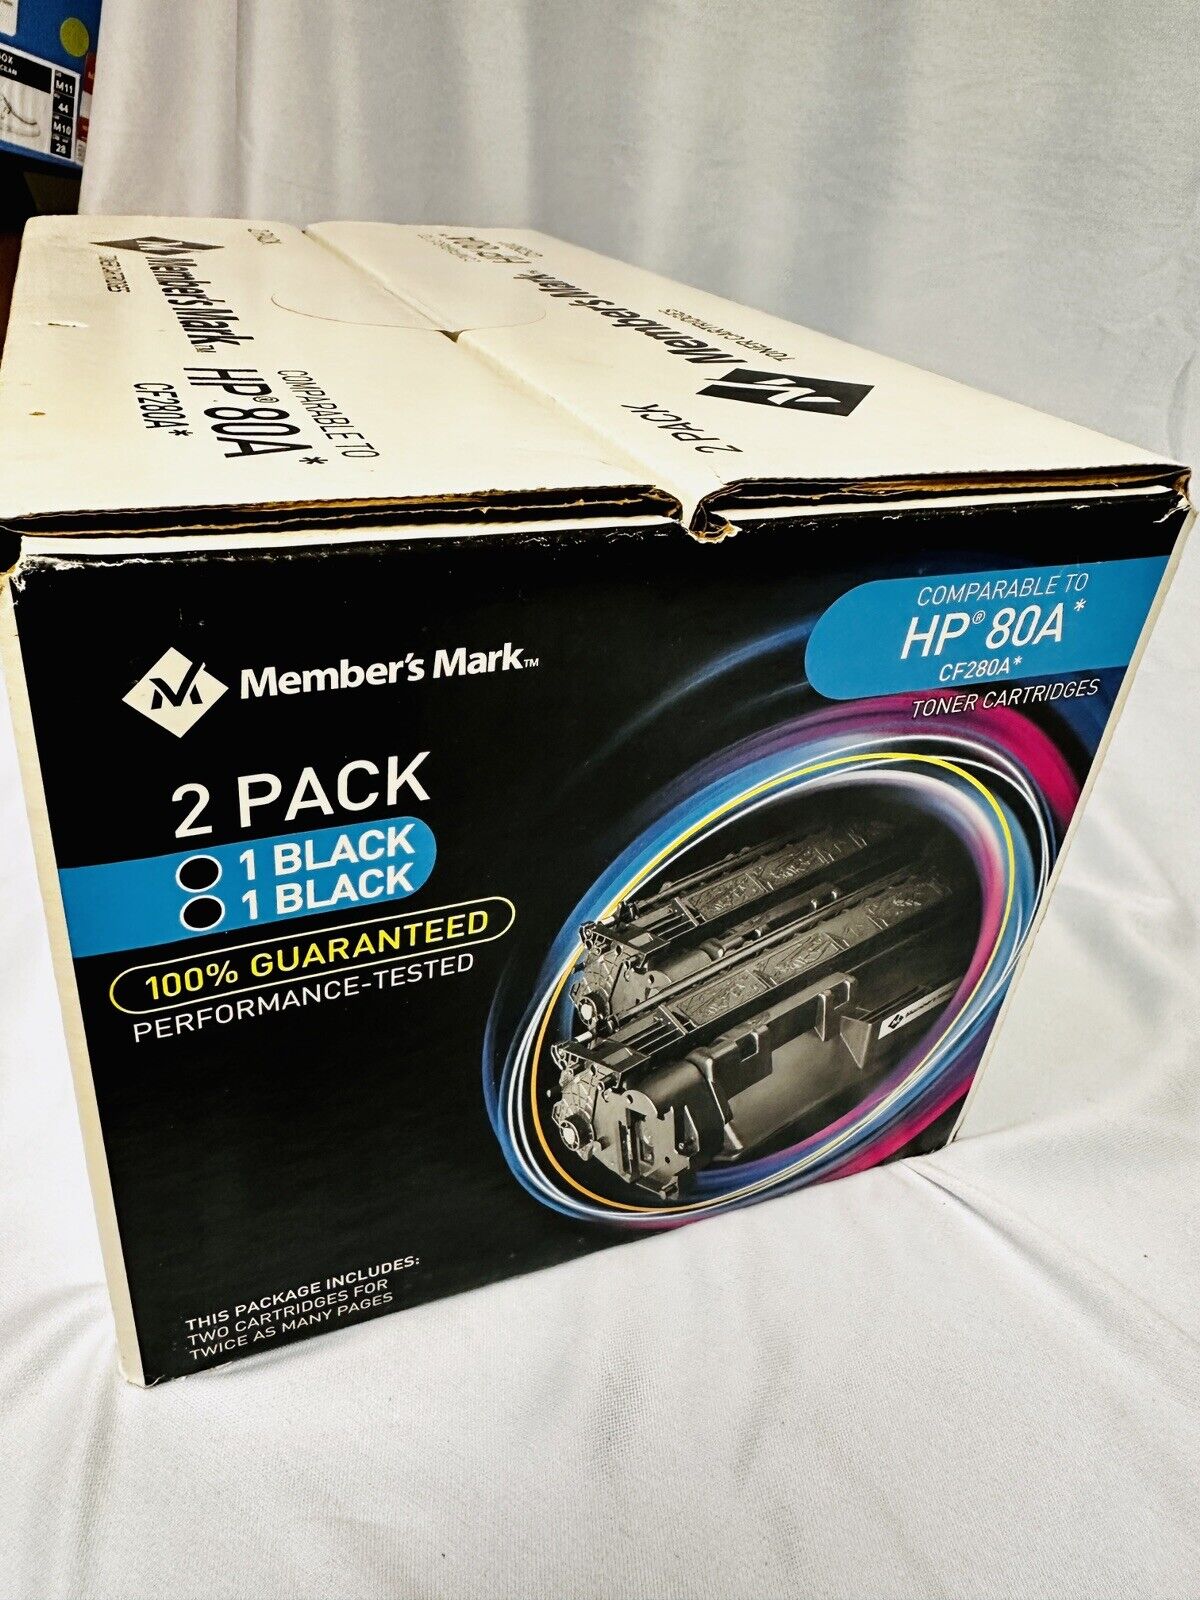 Member's Mark HP 80A Toner Cartridge 2-PACK CF280A *Brand New Factory Sealed*